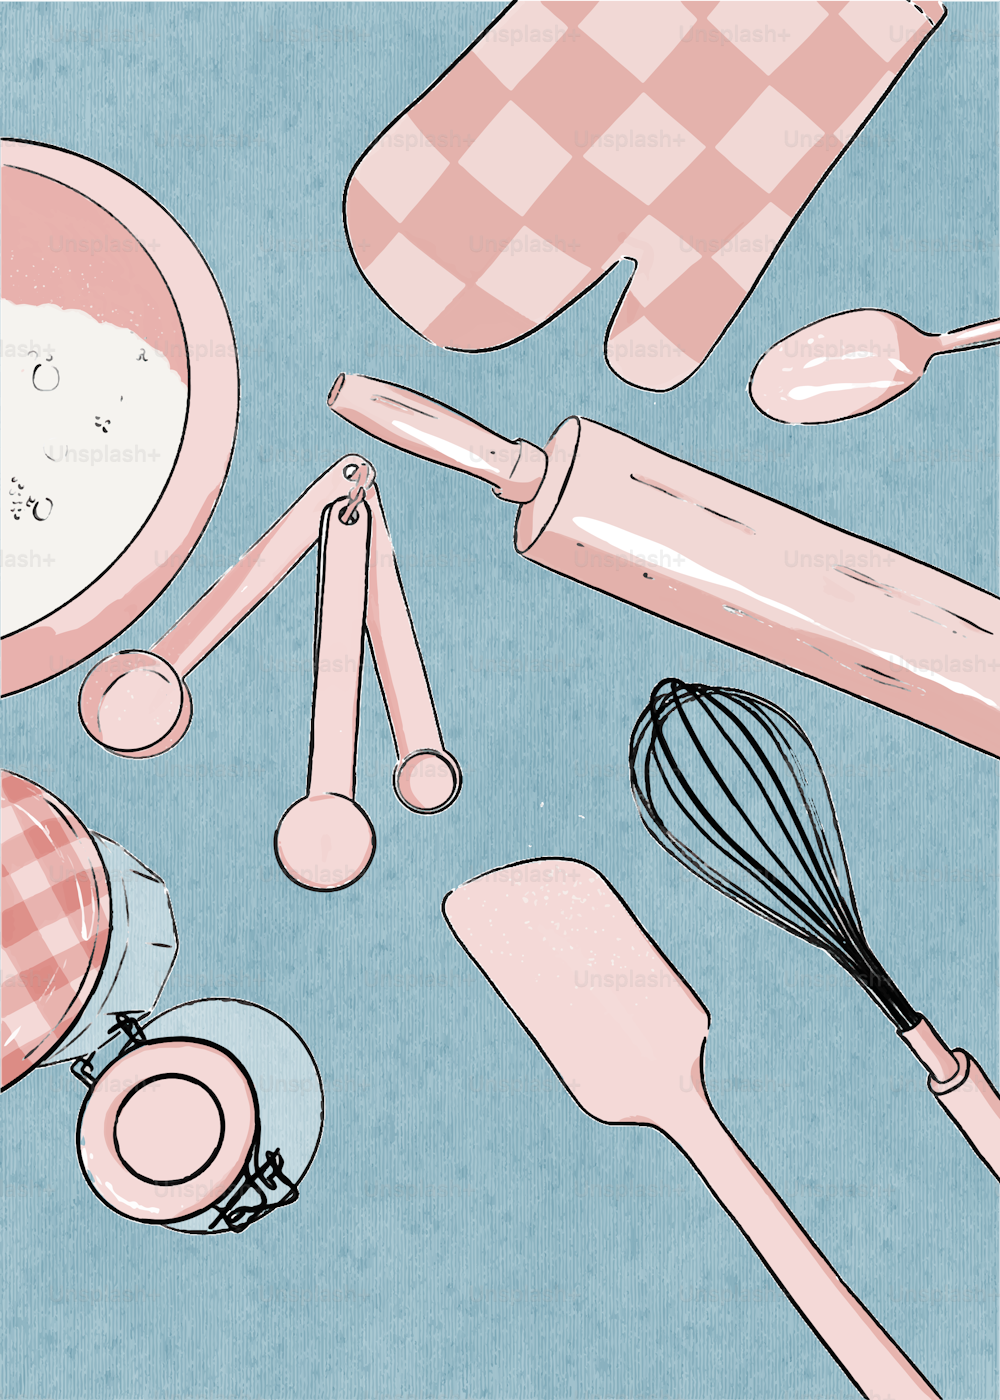 un disegno di utensili da cucina e altri oggetti da cucina